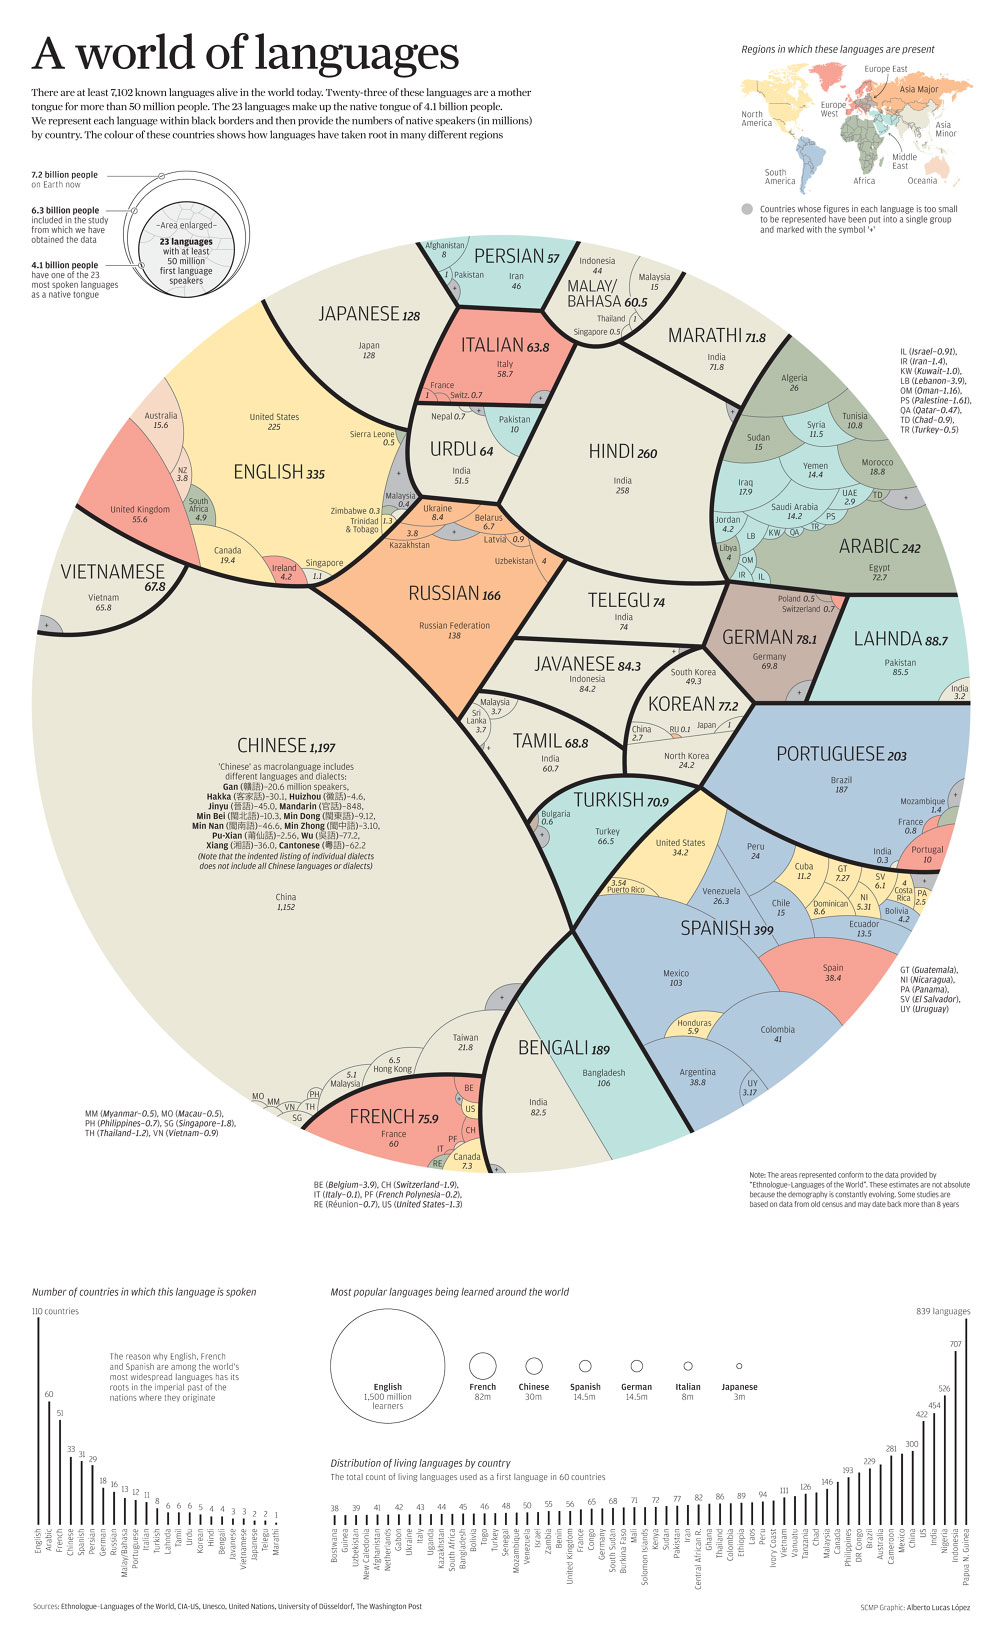 languages-of-the-world-large.jpg